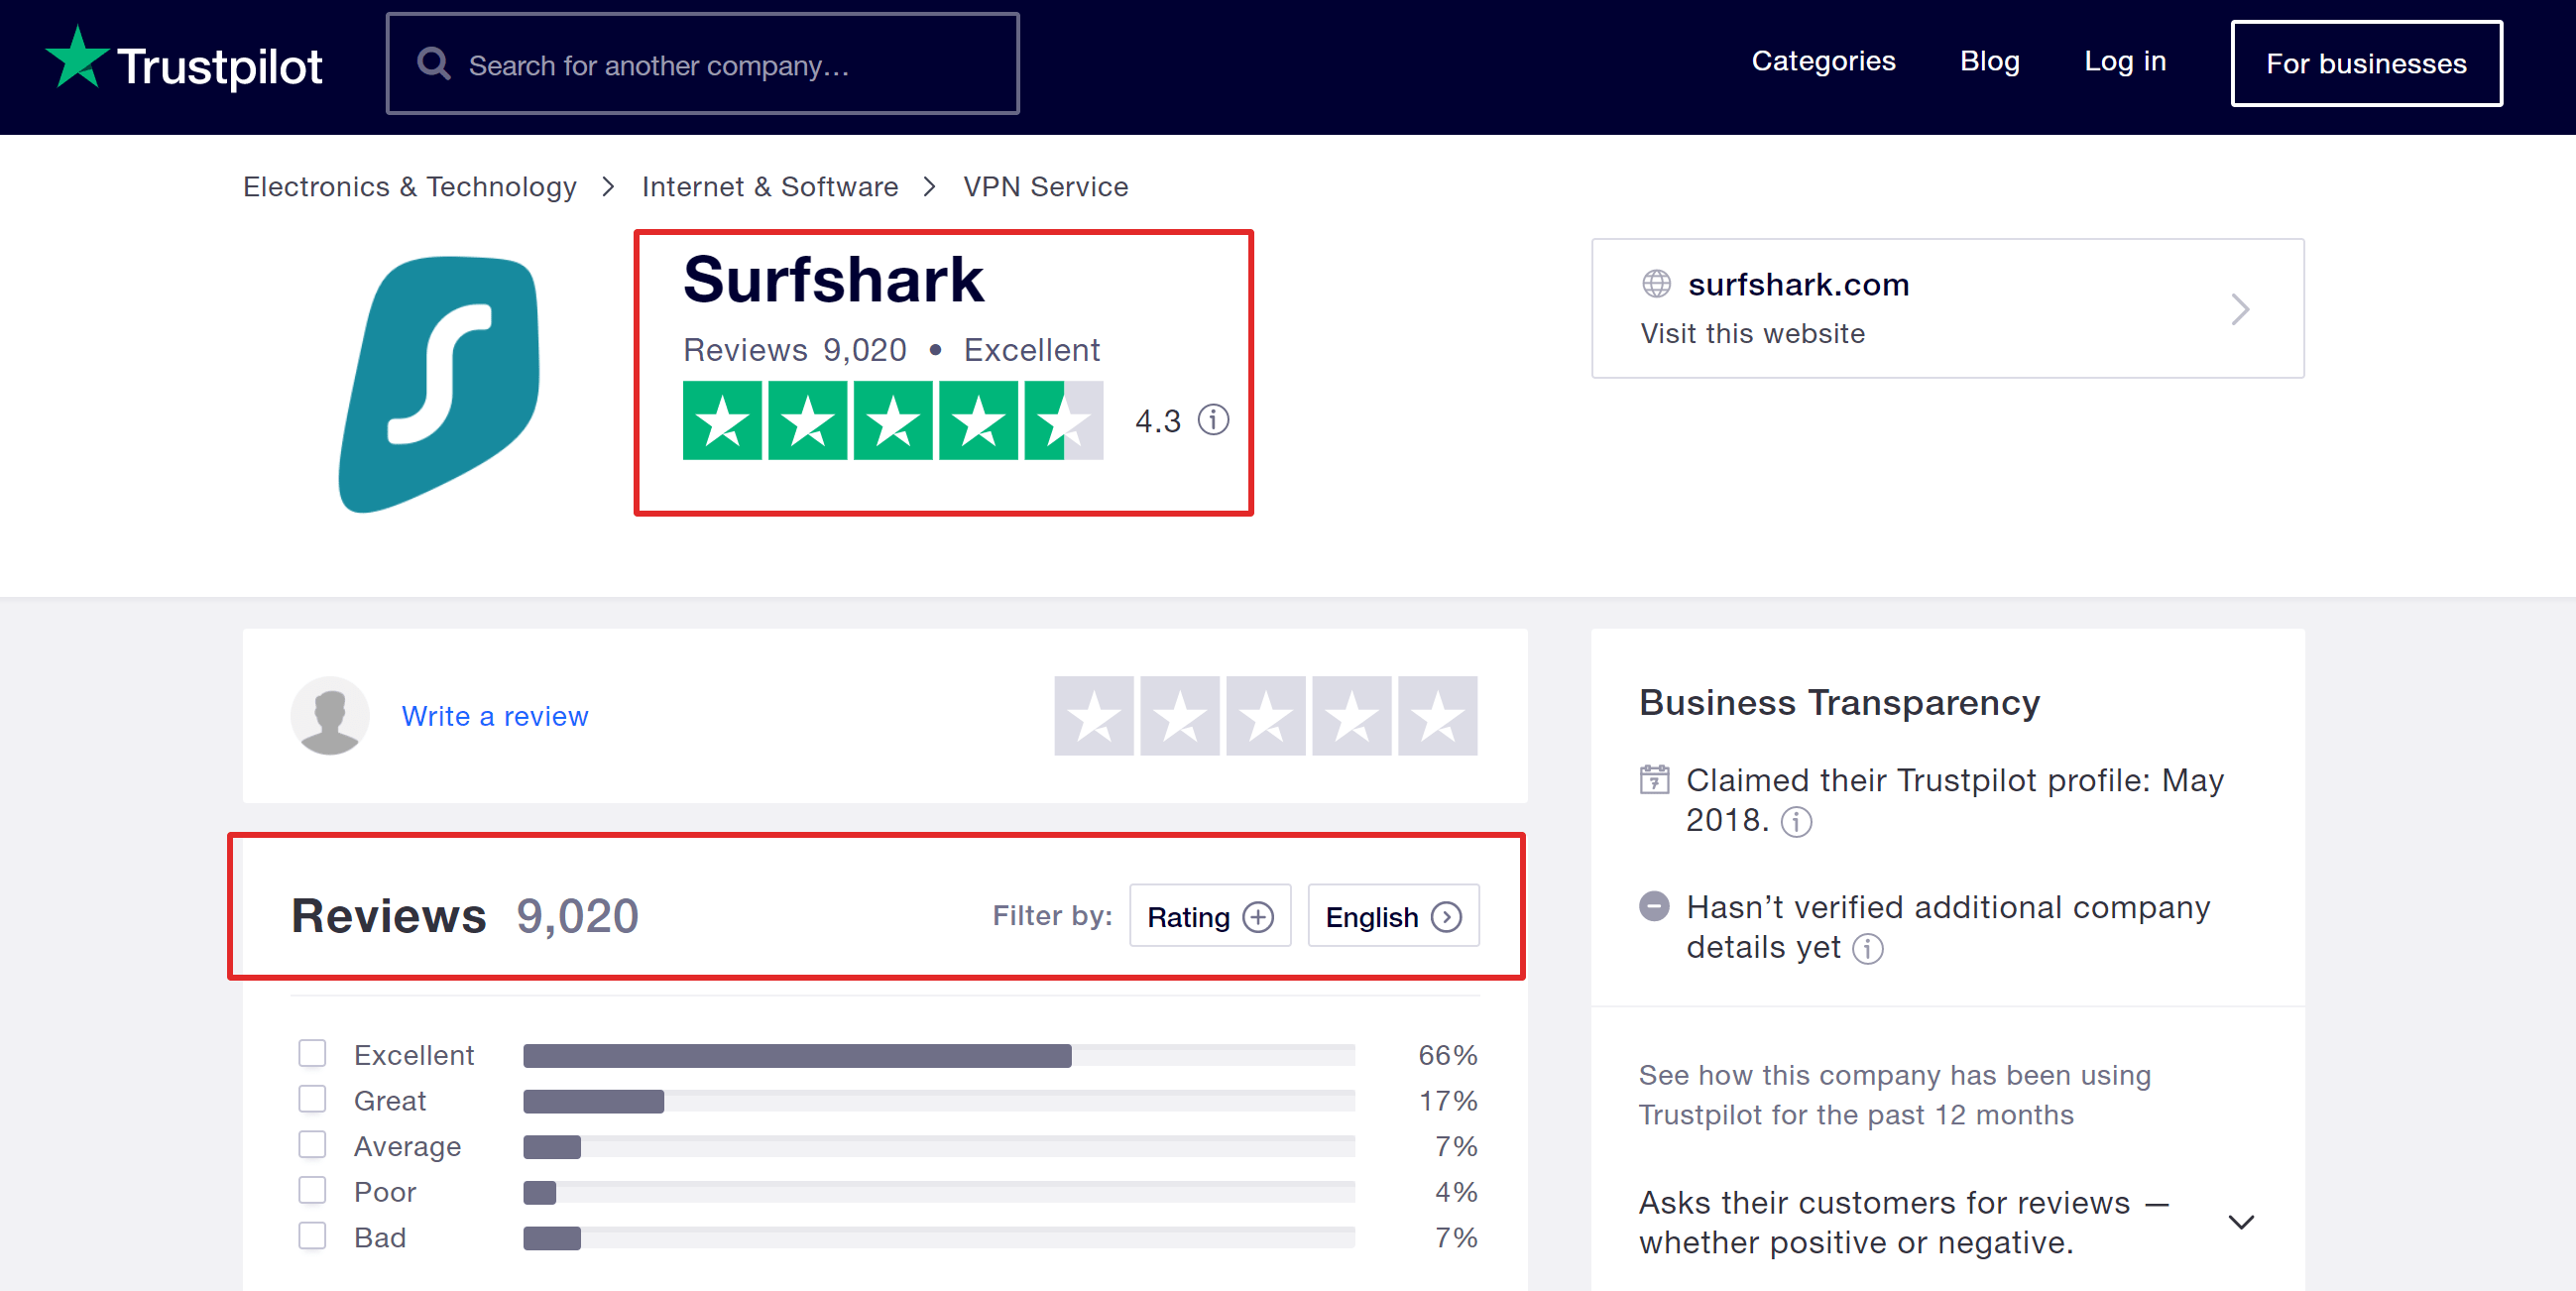 Surfshark Trustpilot Reviews